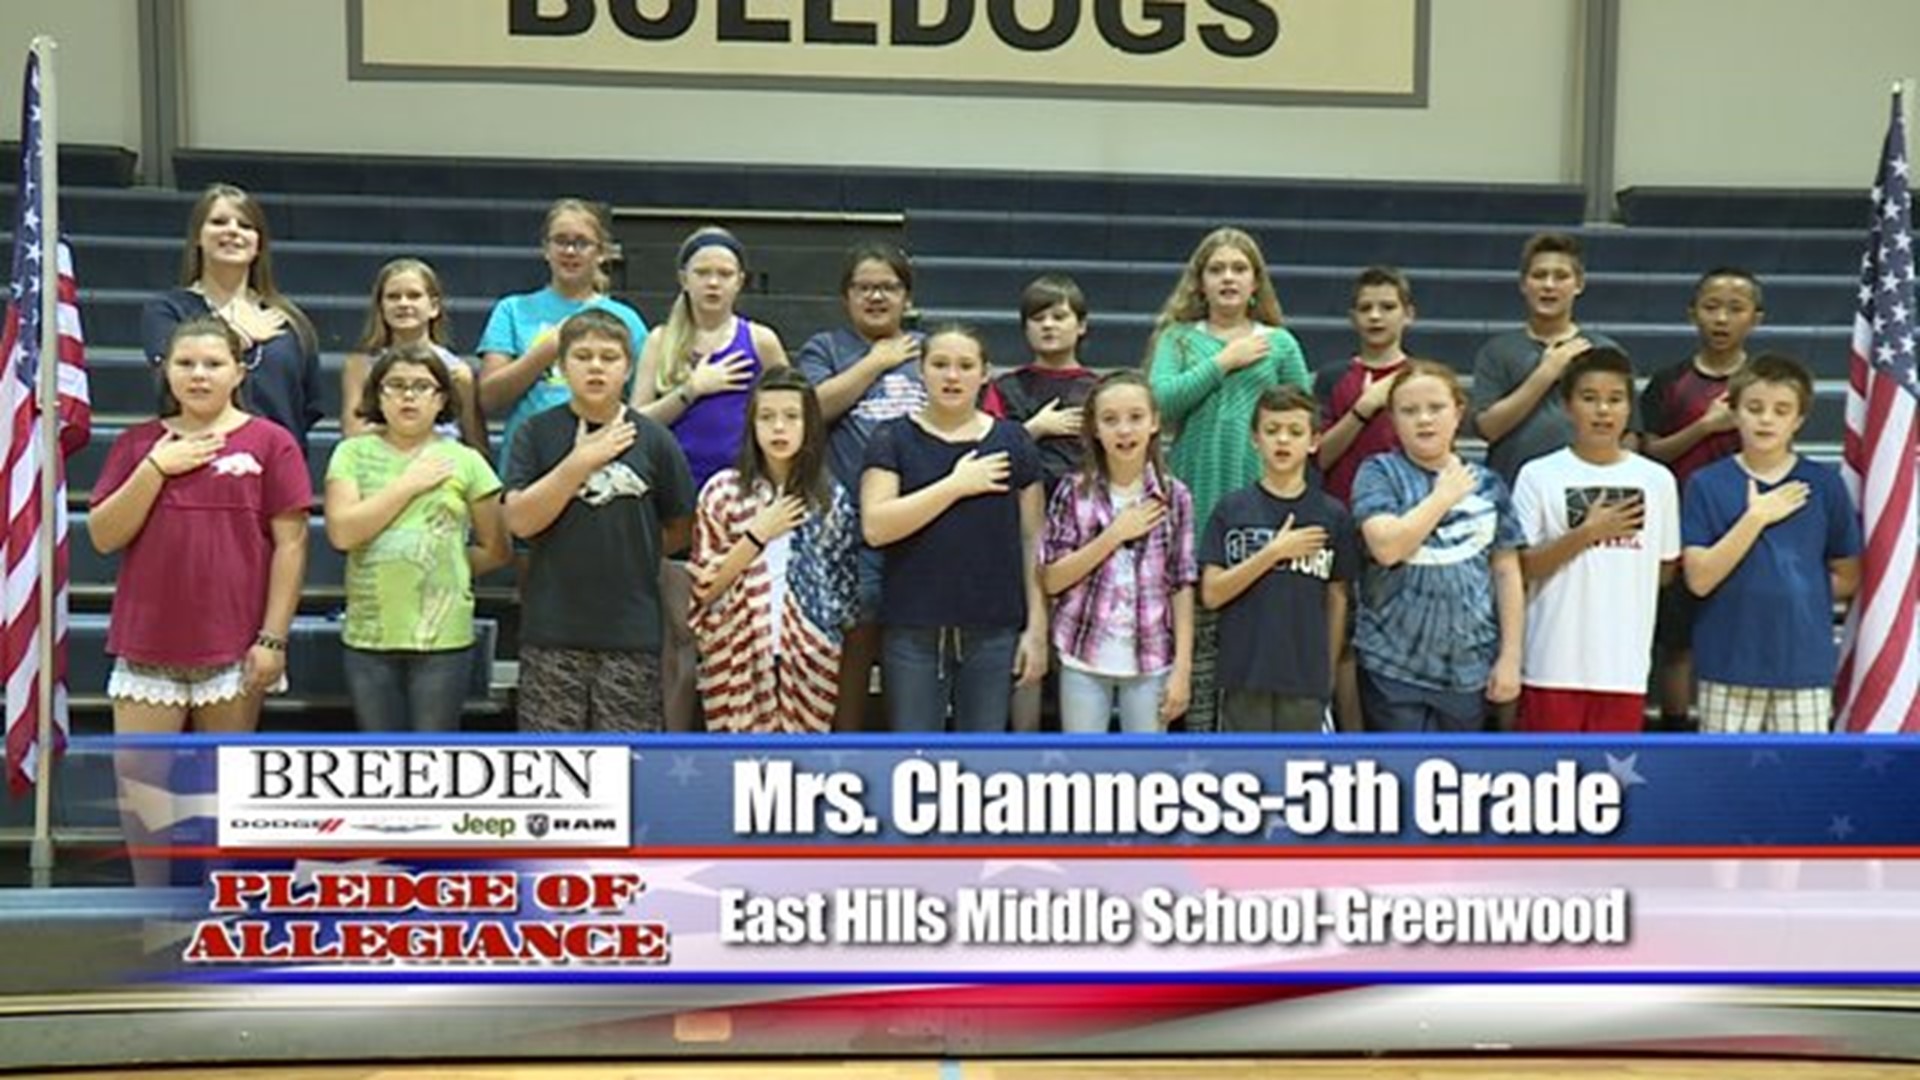 East Hills Middle School  Greenwood  Mrs. Chamness  5th Grade